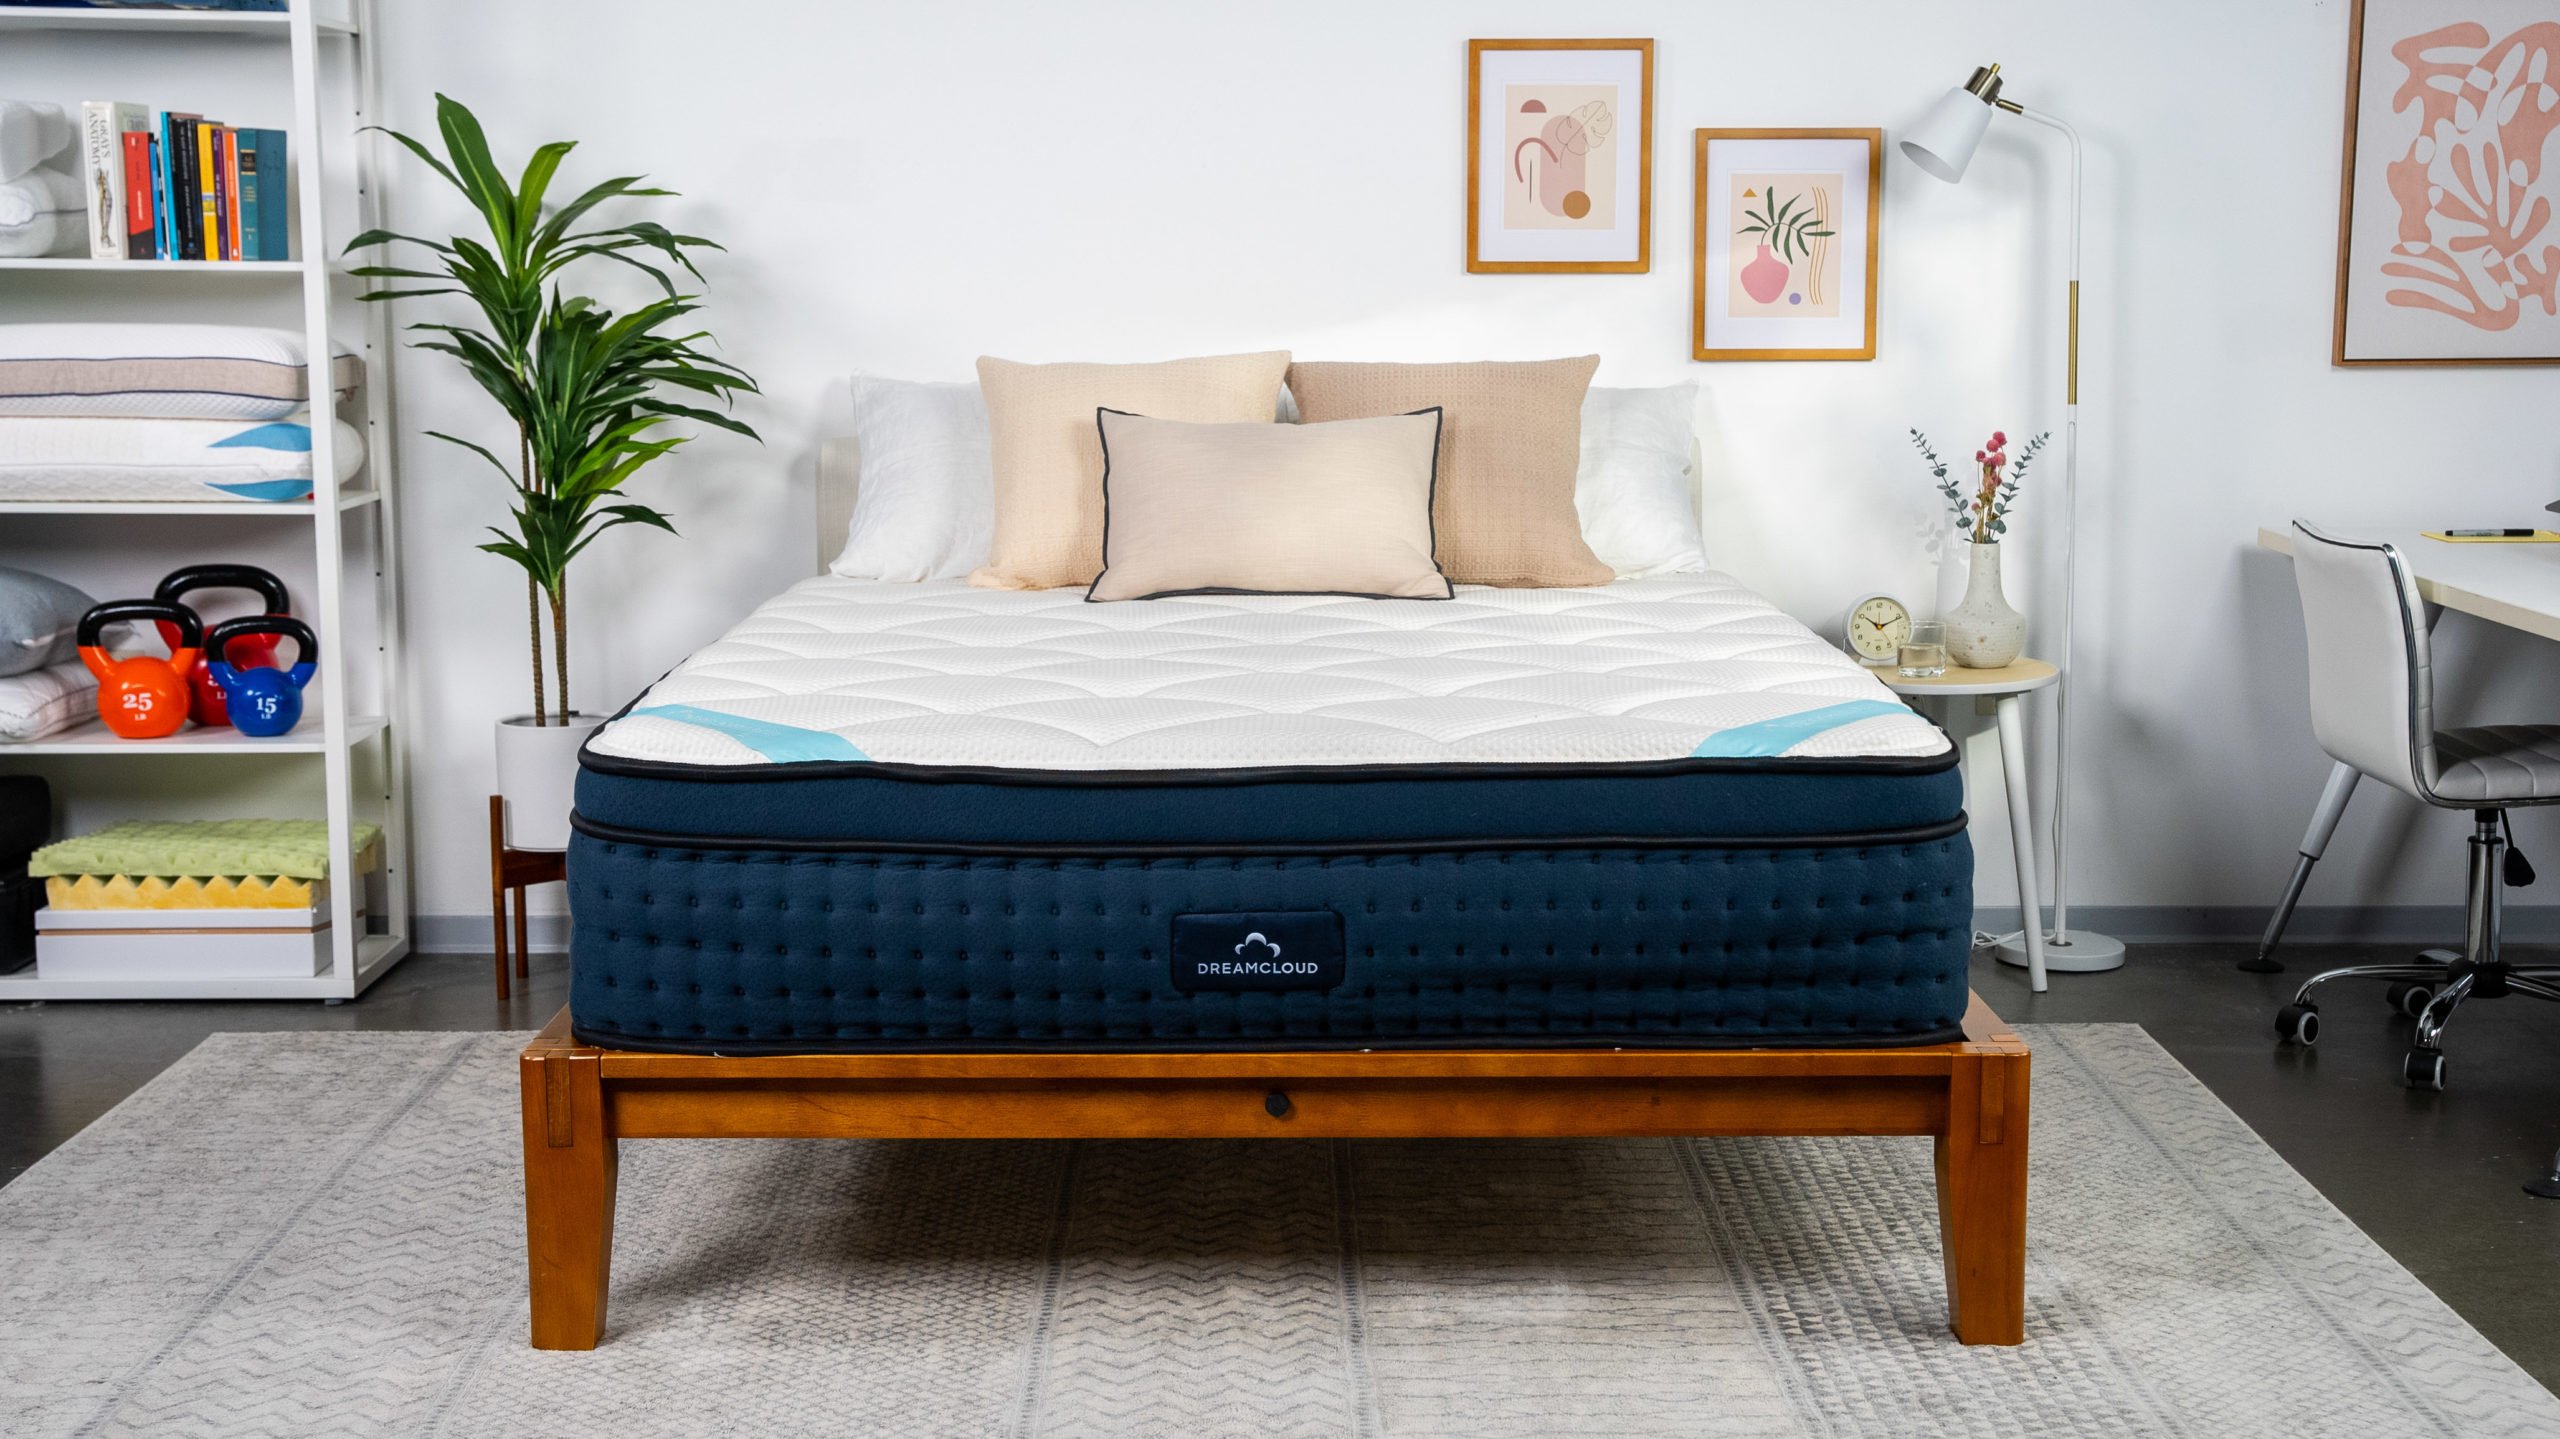 dream cloud 14 inch hybrid mattress reviews